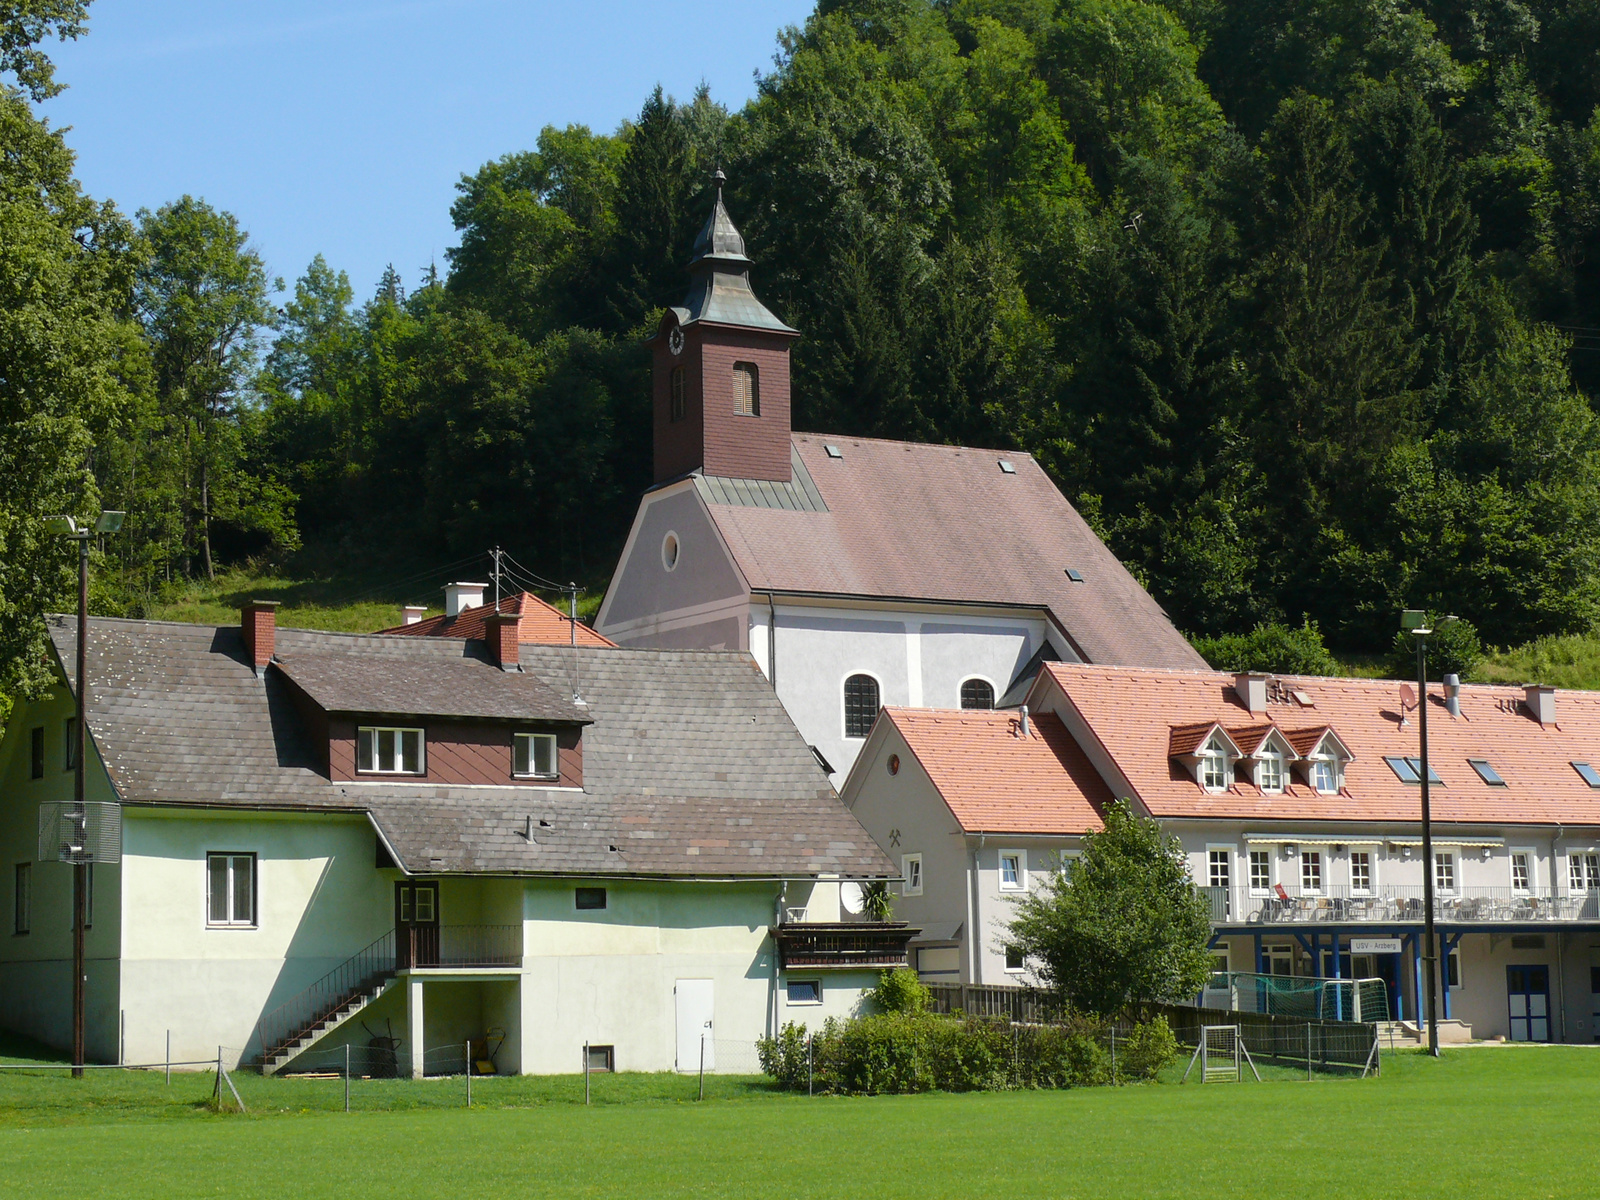 Ausztria egy kis faluja